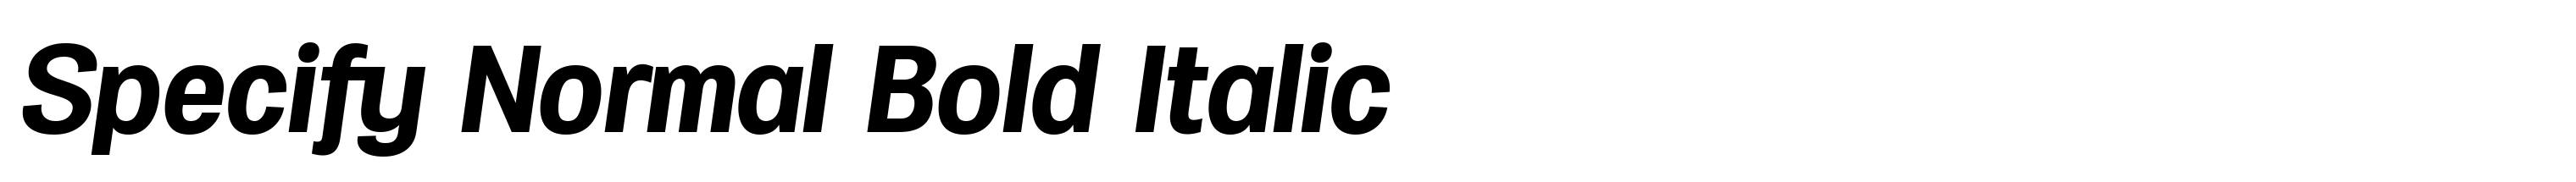 Specify Normal Bold Italic